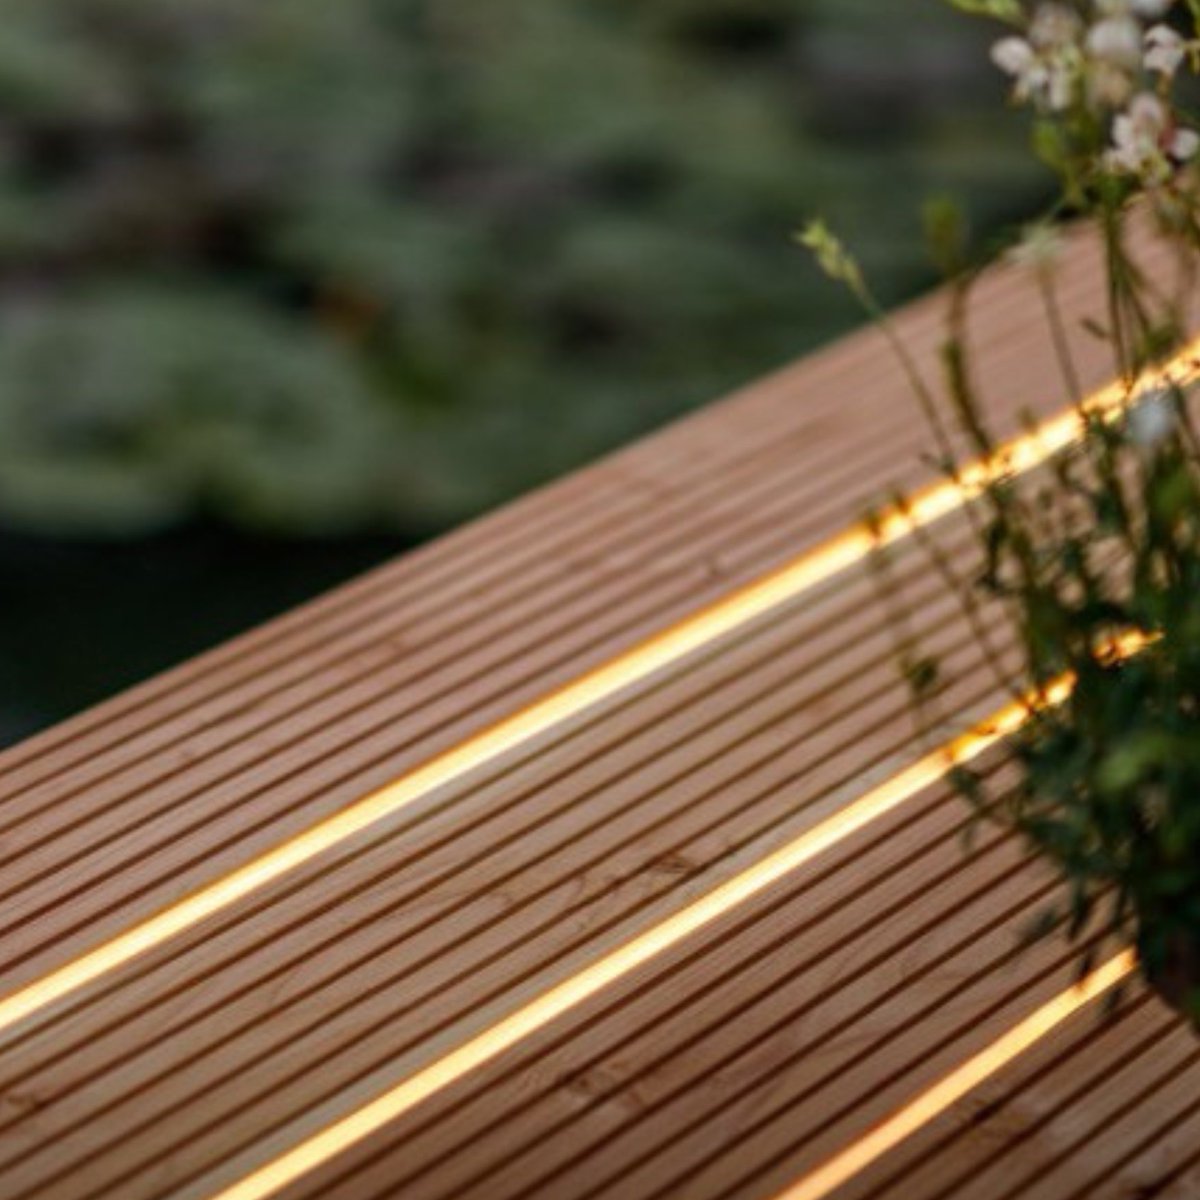 Upgrade your Lightpro system with ease! Introducing our new LED strip—15mtr lengths ready to illuminate 💡

#dreamhome #homeinspo #lightingdesign #outdoorliving #outdoor #homedecor #design #gardendesign #interiordesign #gardendesigner #landscapedesign